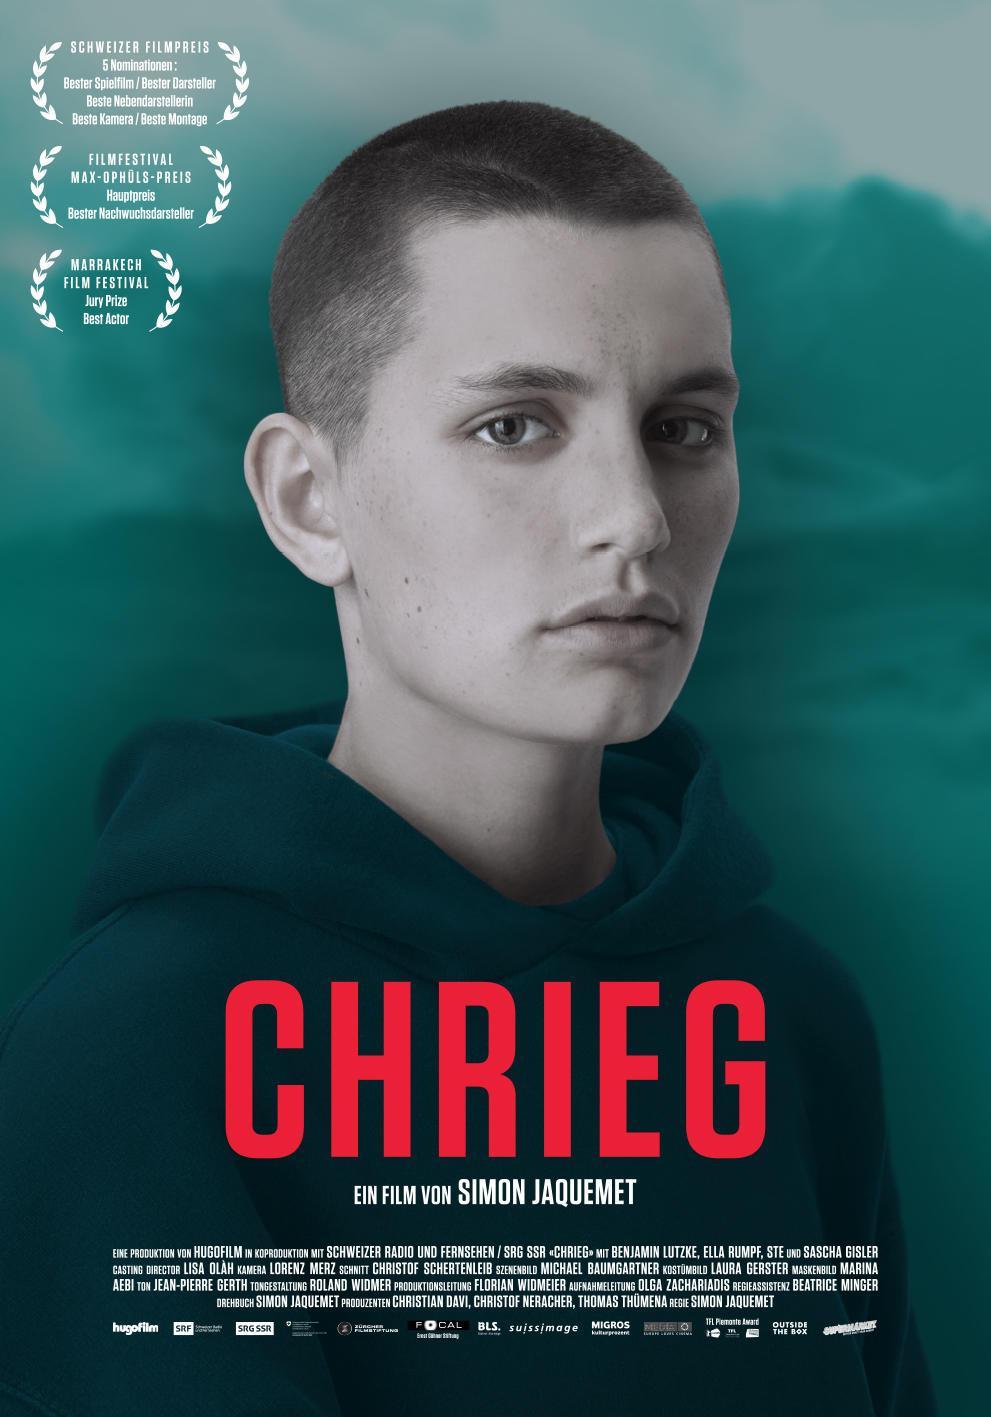 Постер фильма Chrieg